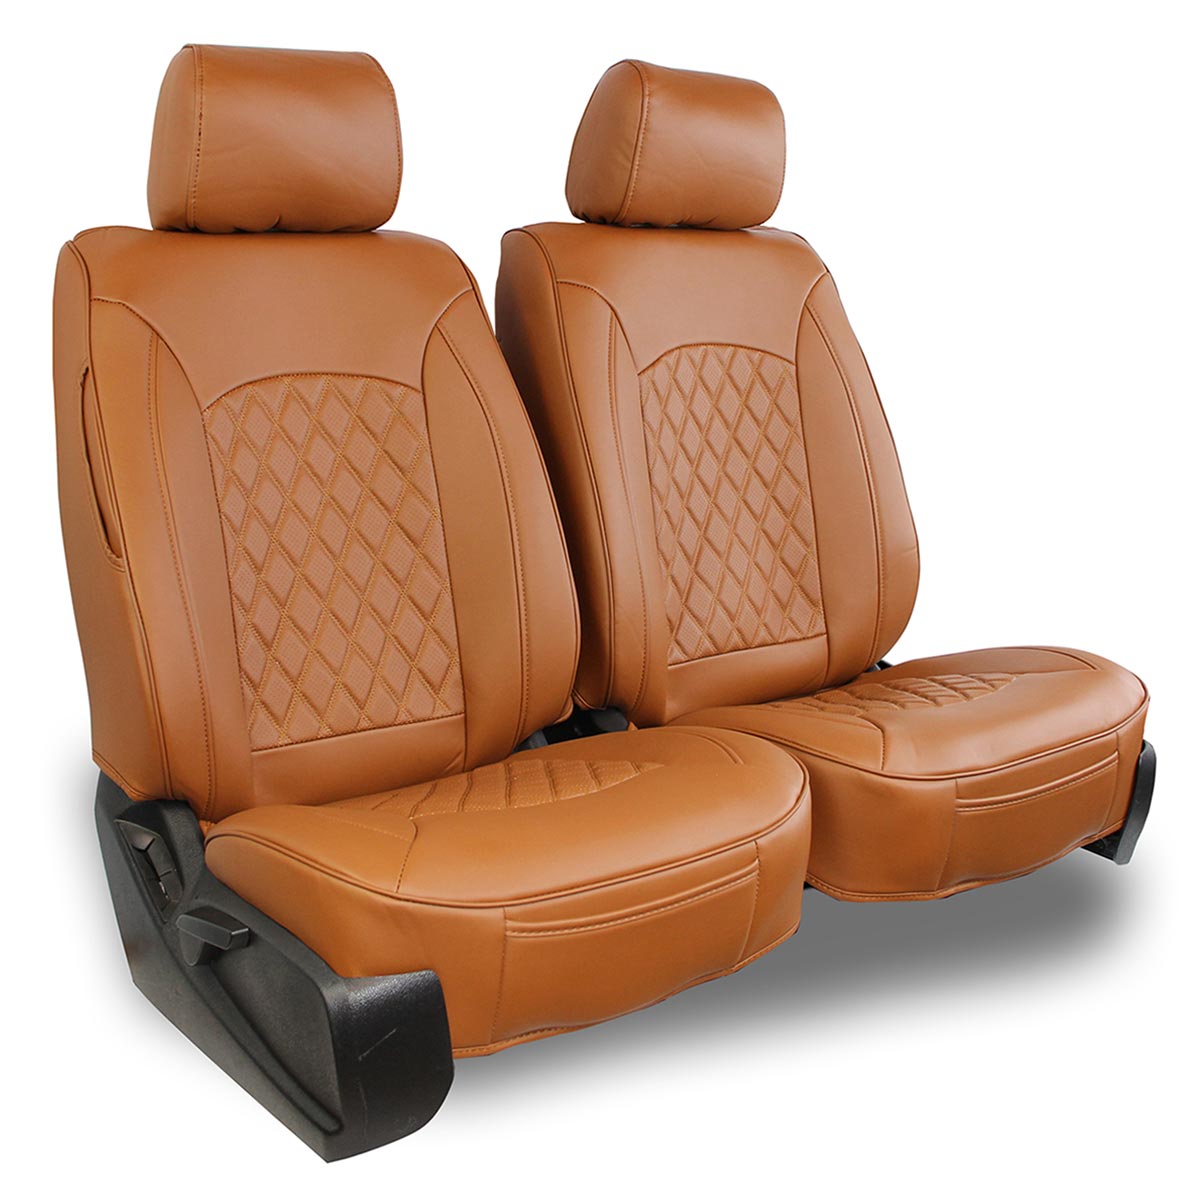 Semi-Custom Leatherette Diamond Seat Covers - Premium Quality